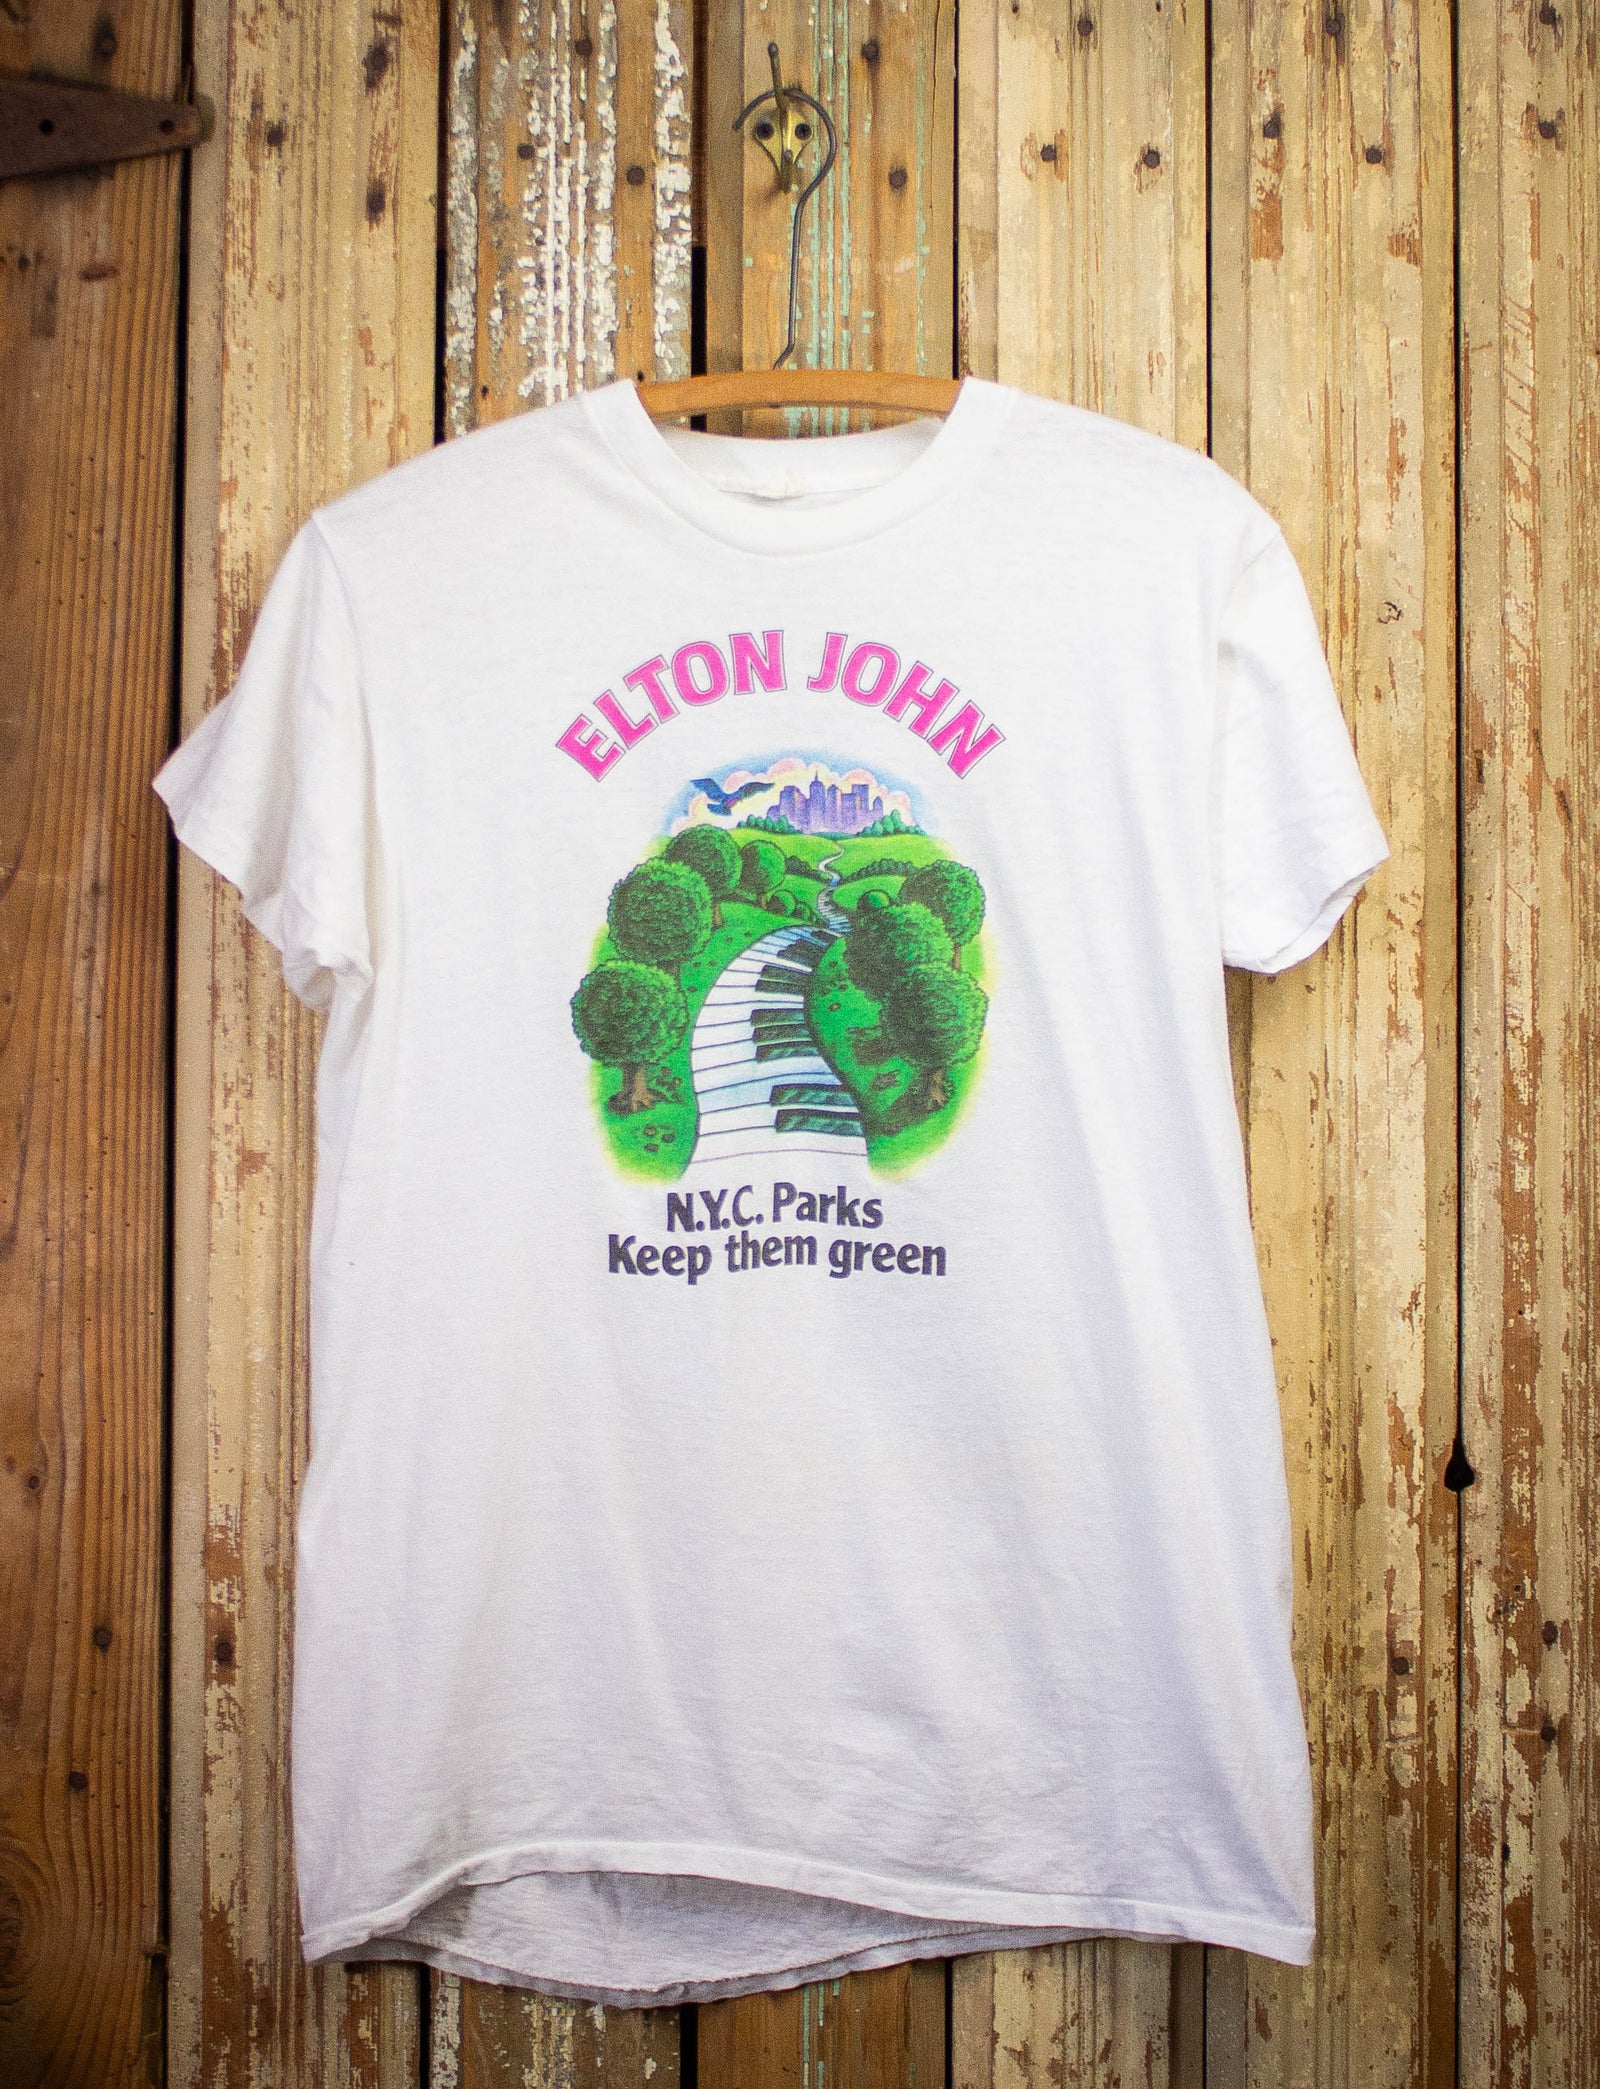 Vintage Elton John Central Park Concert T Shirt 1980 White Medium